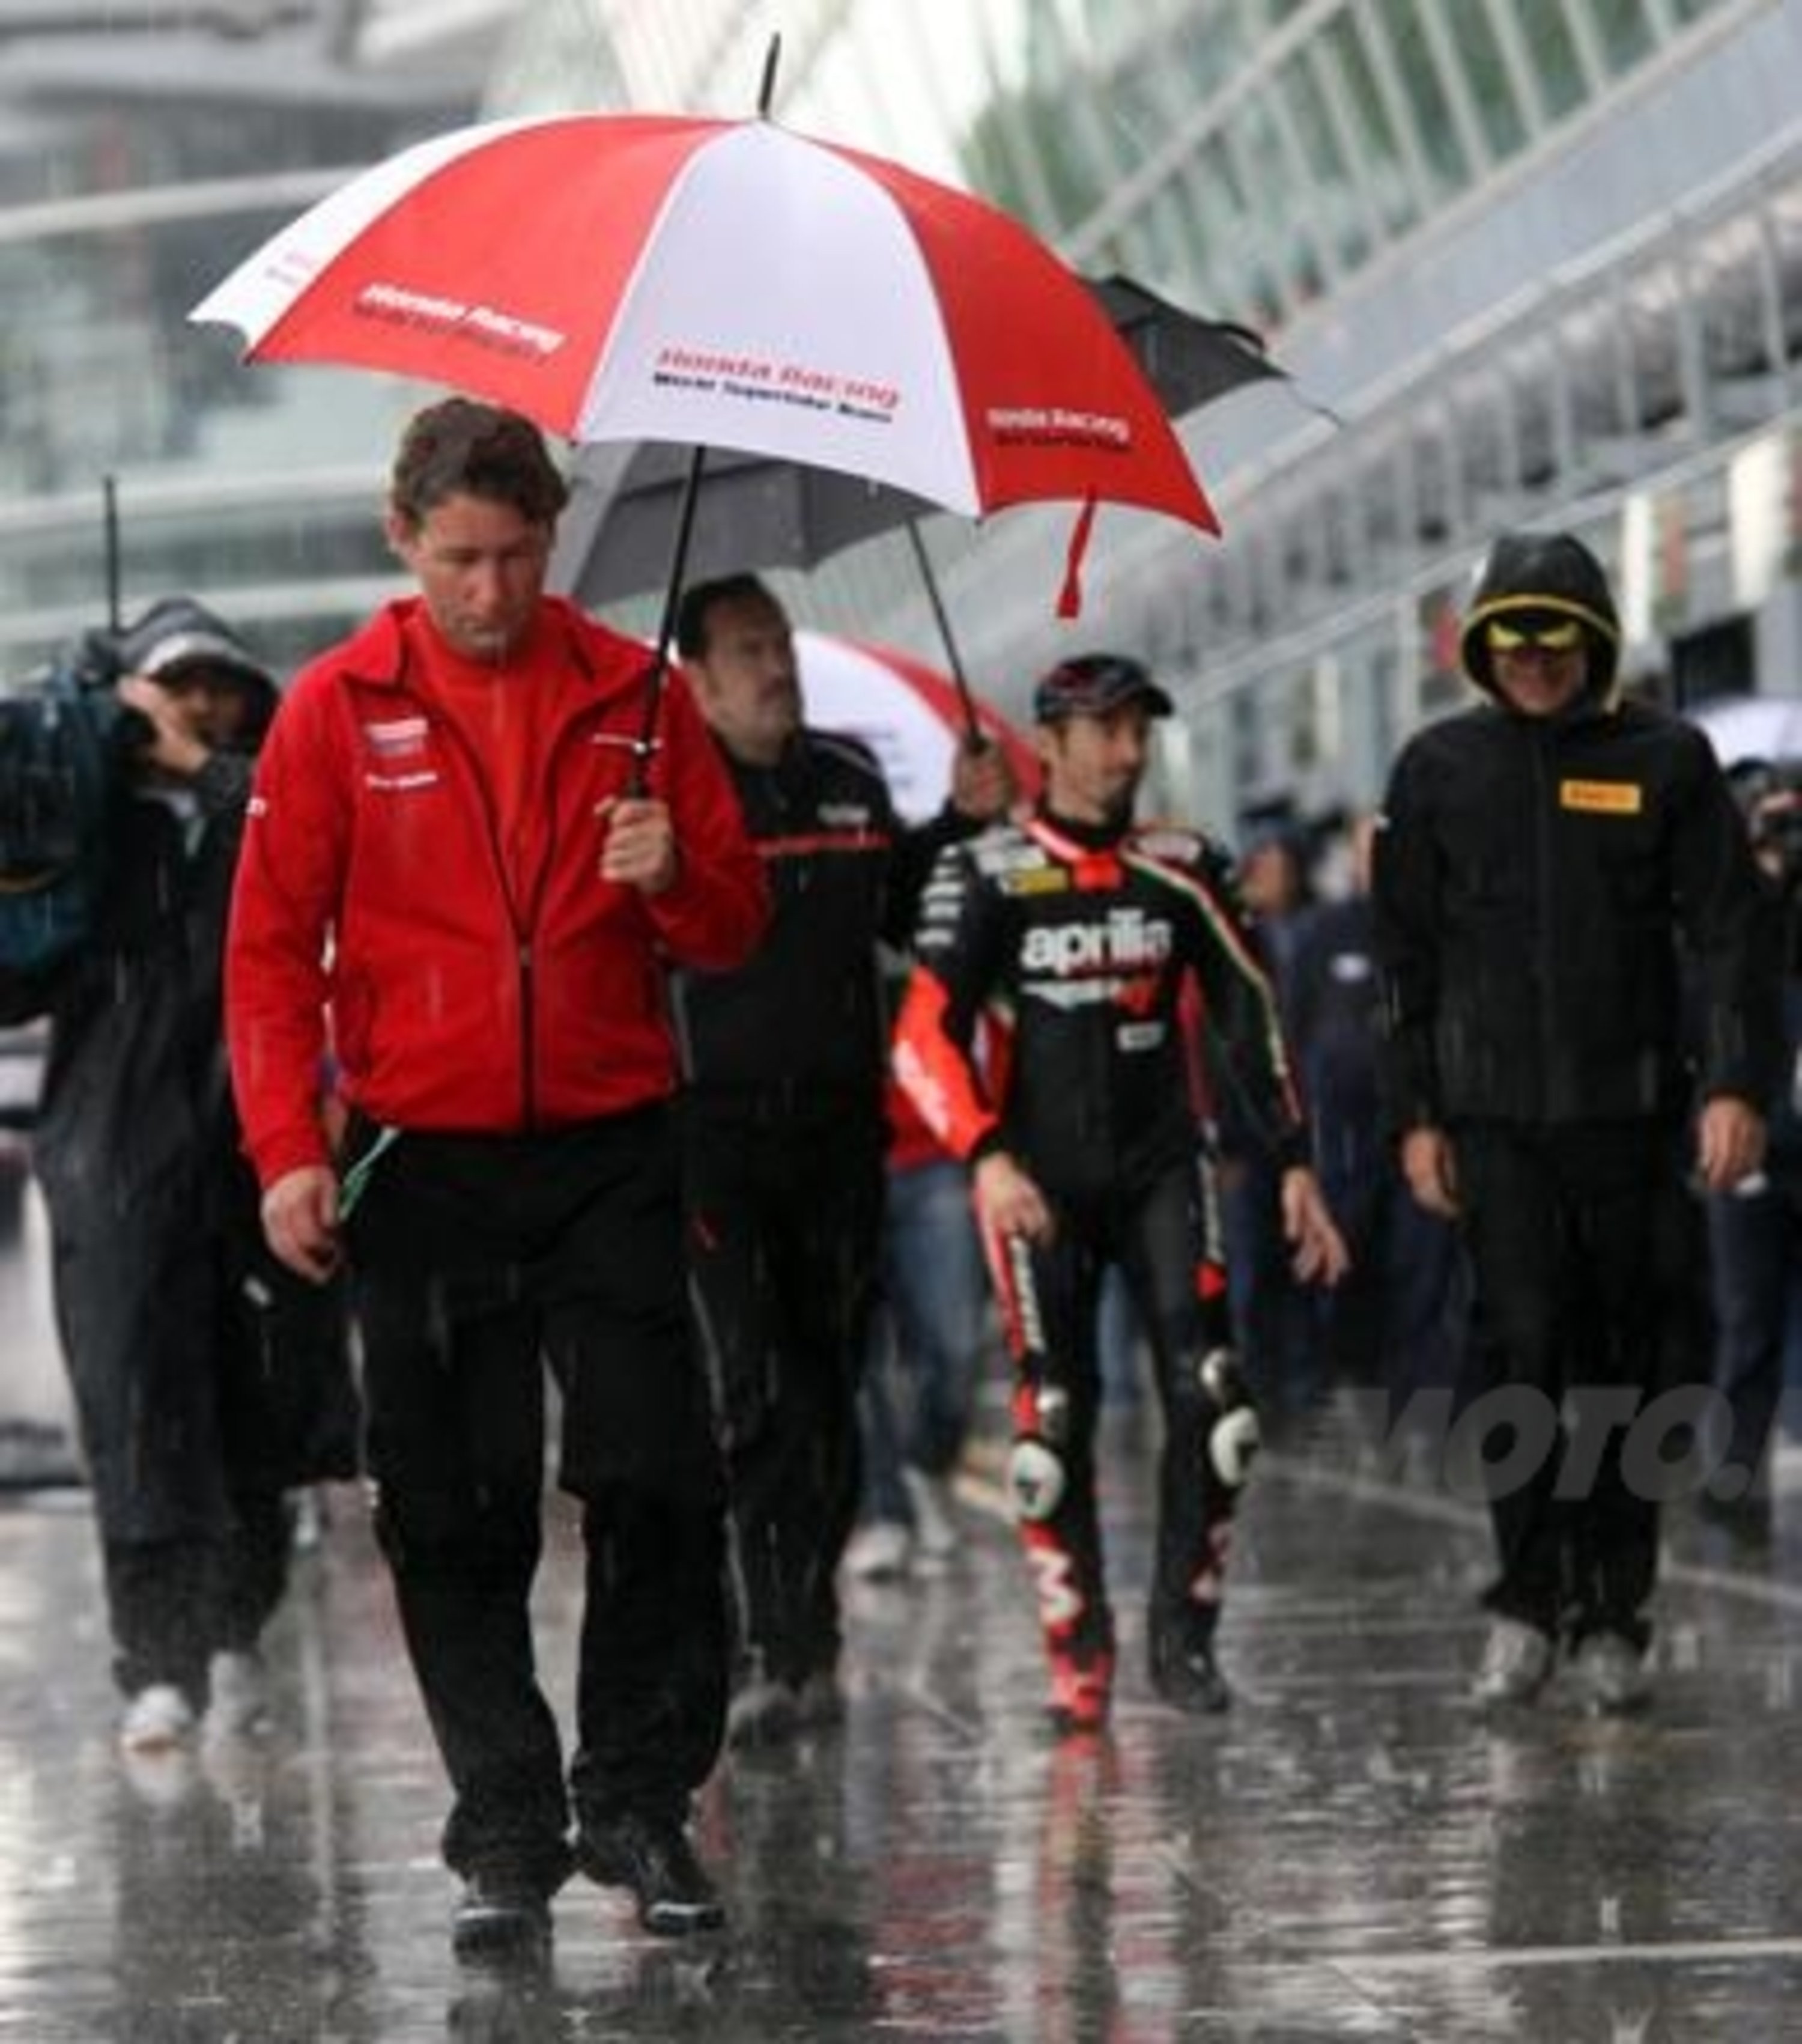 SBK. Infront Motor Sports rimborsa gli spettatori del GP di Monza